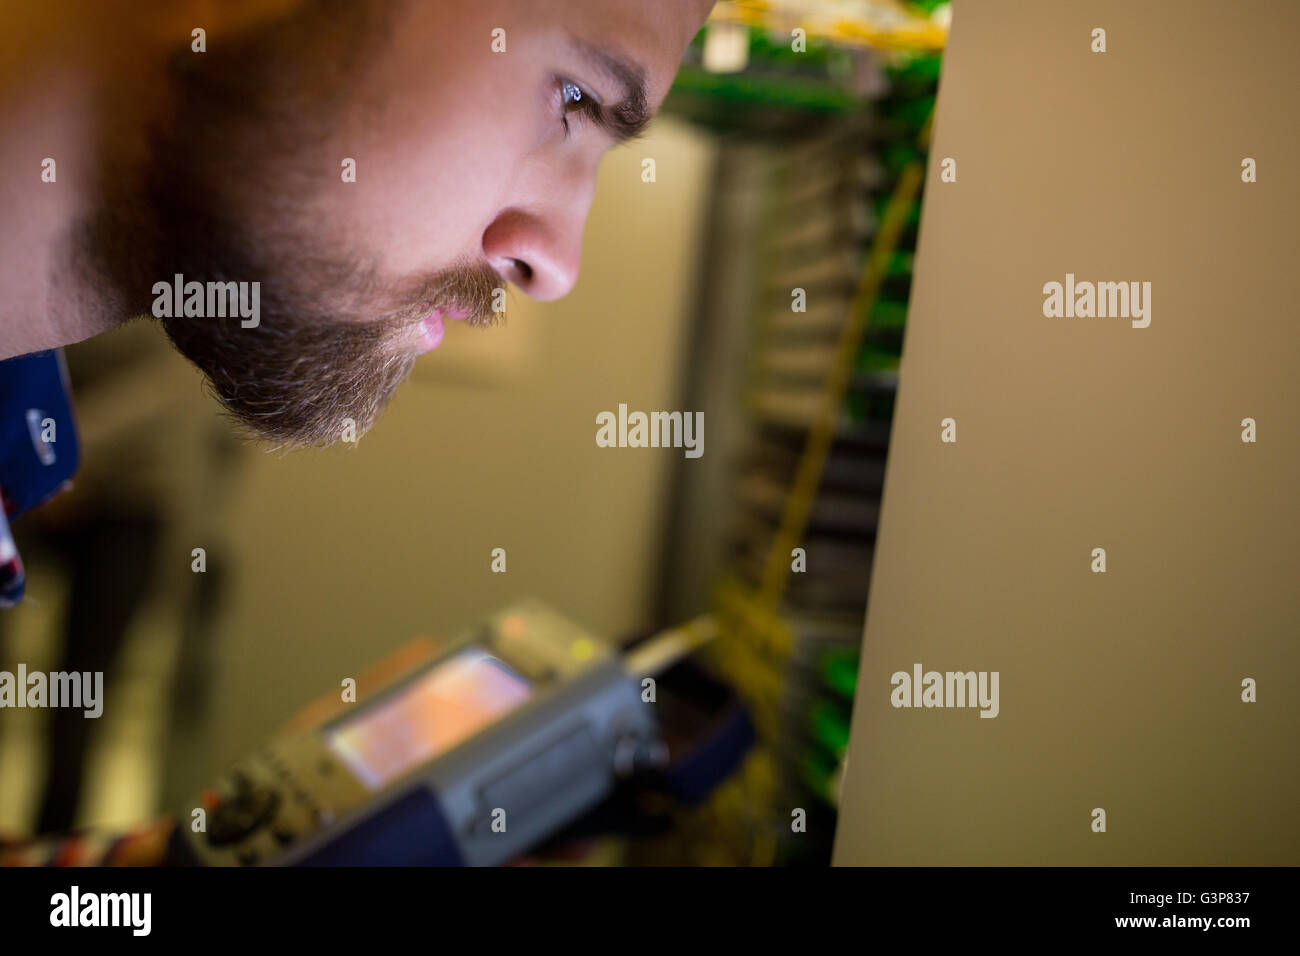 Technician using digital cable analyzer Stock Photo